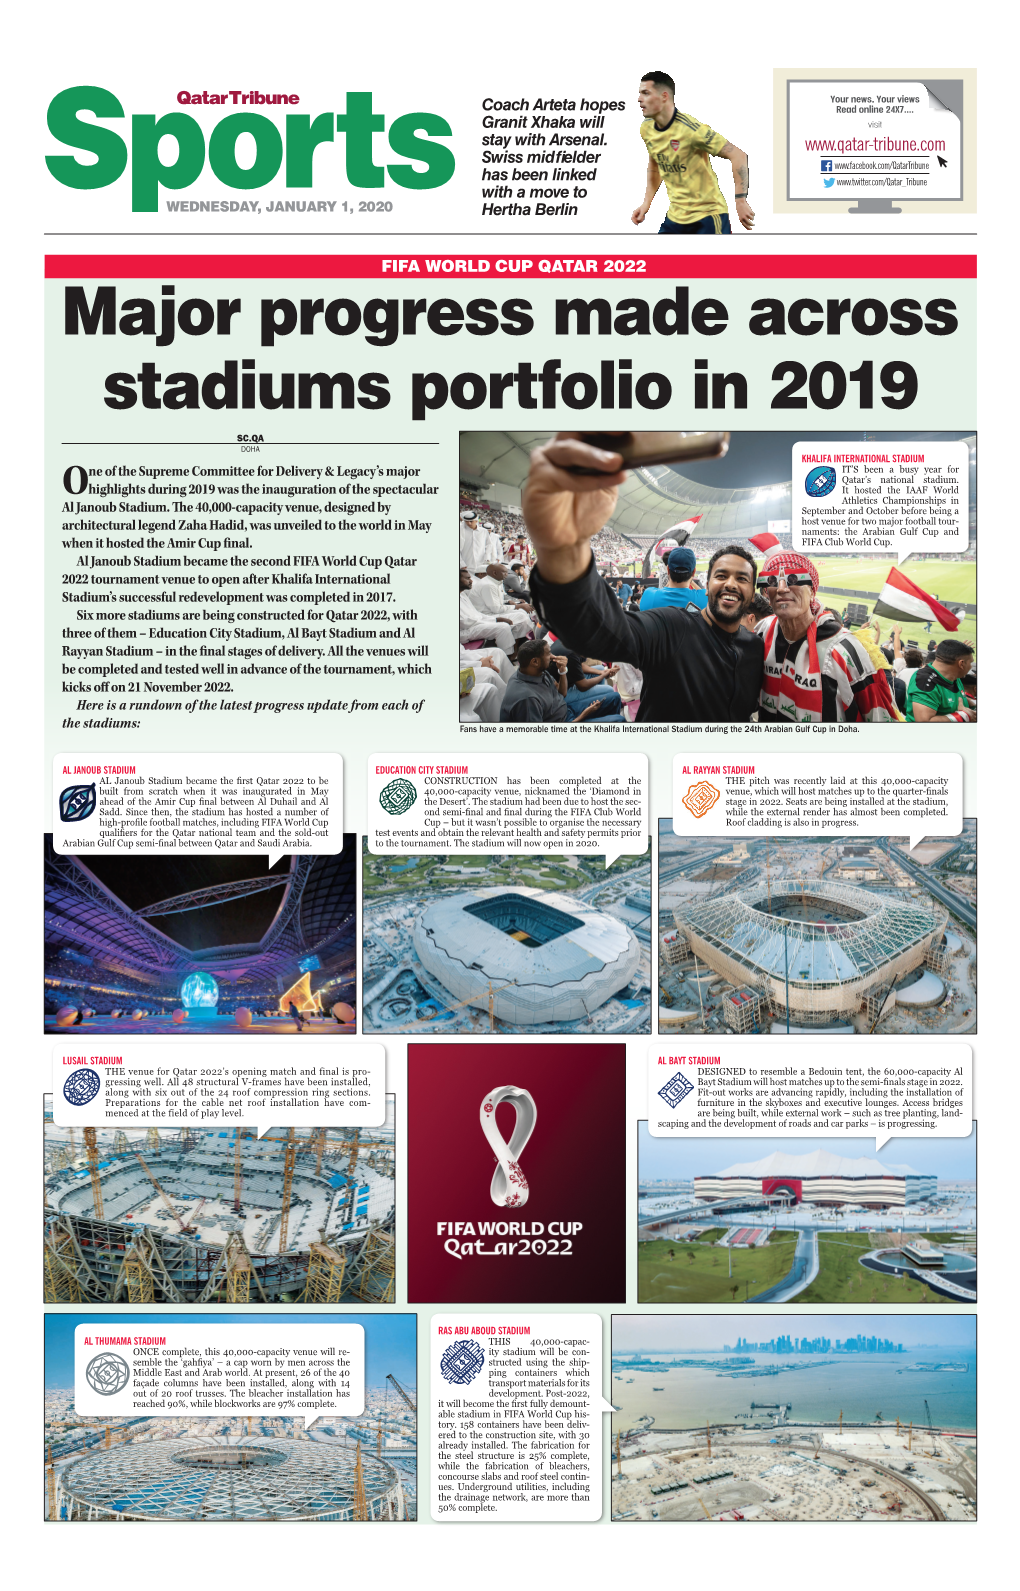 Major Progress Made Across Stadiums Portfolio in 2019